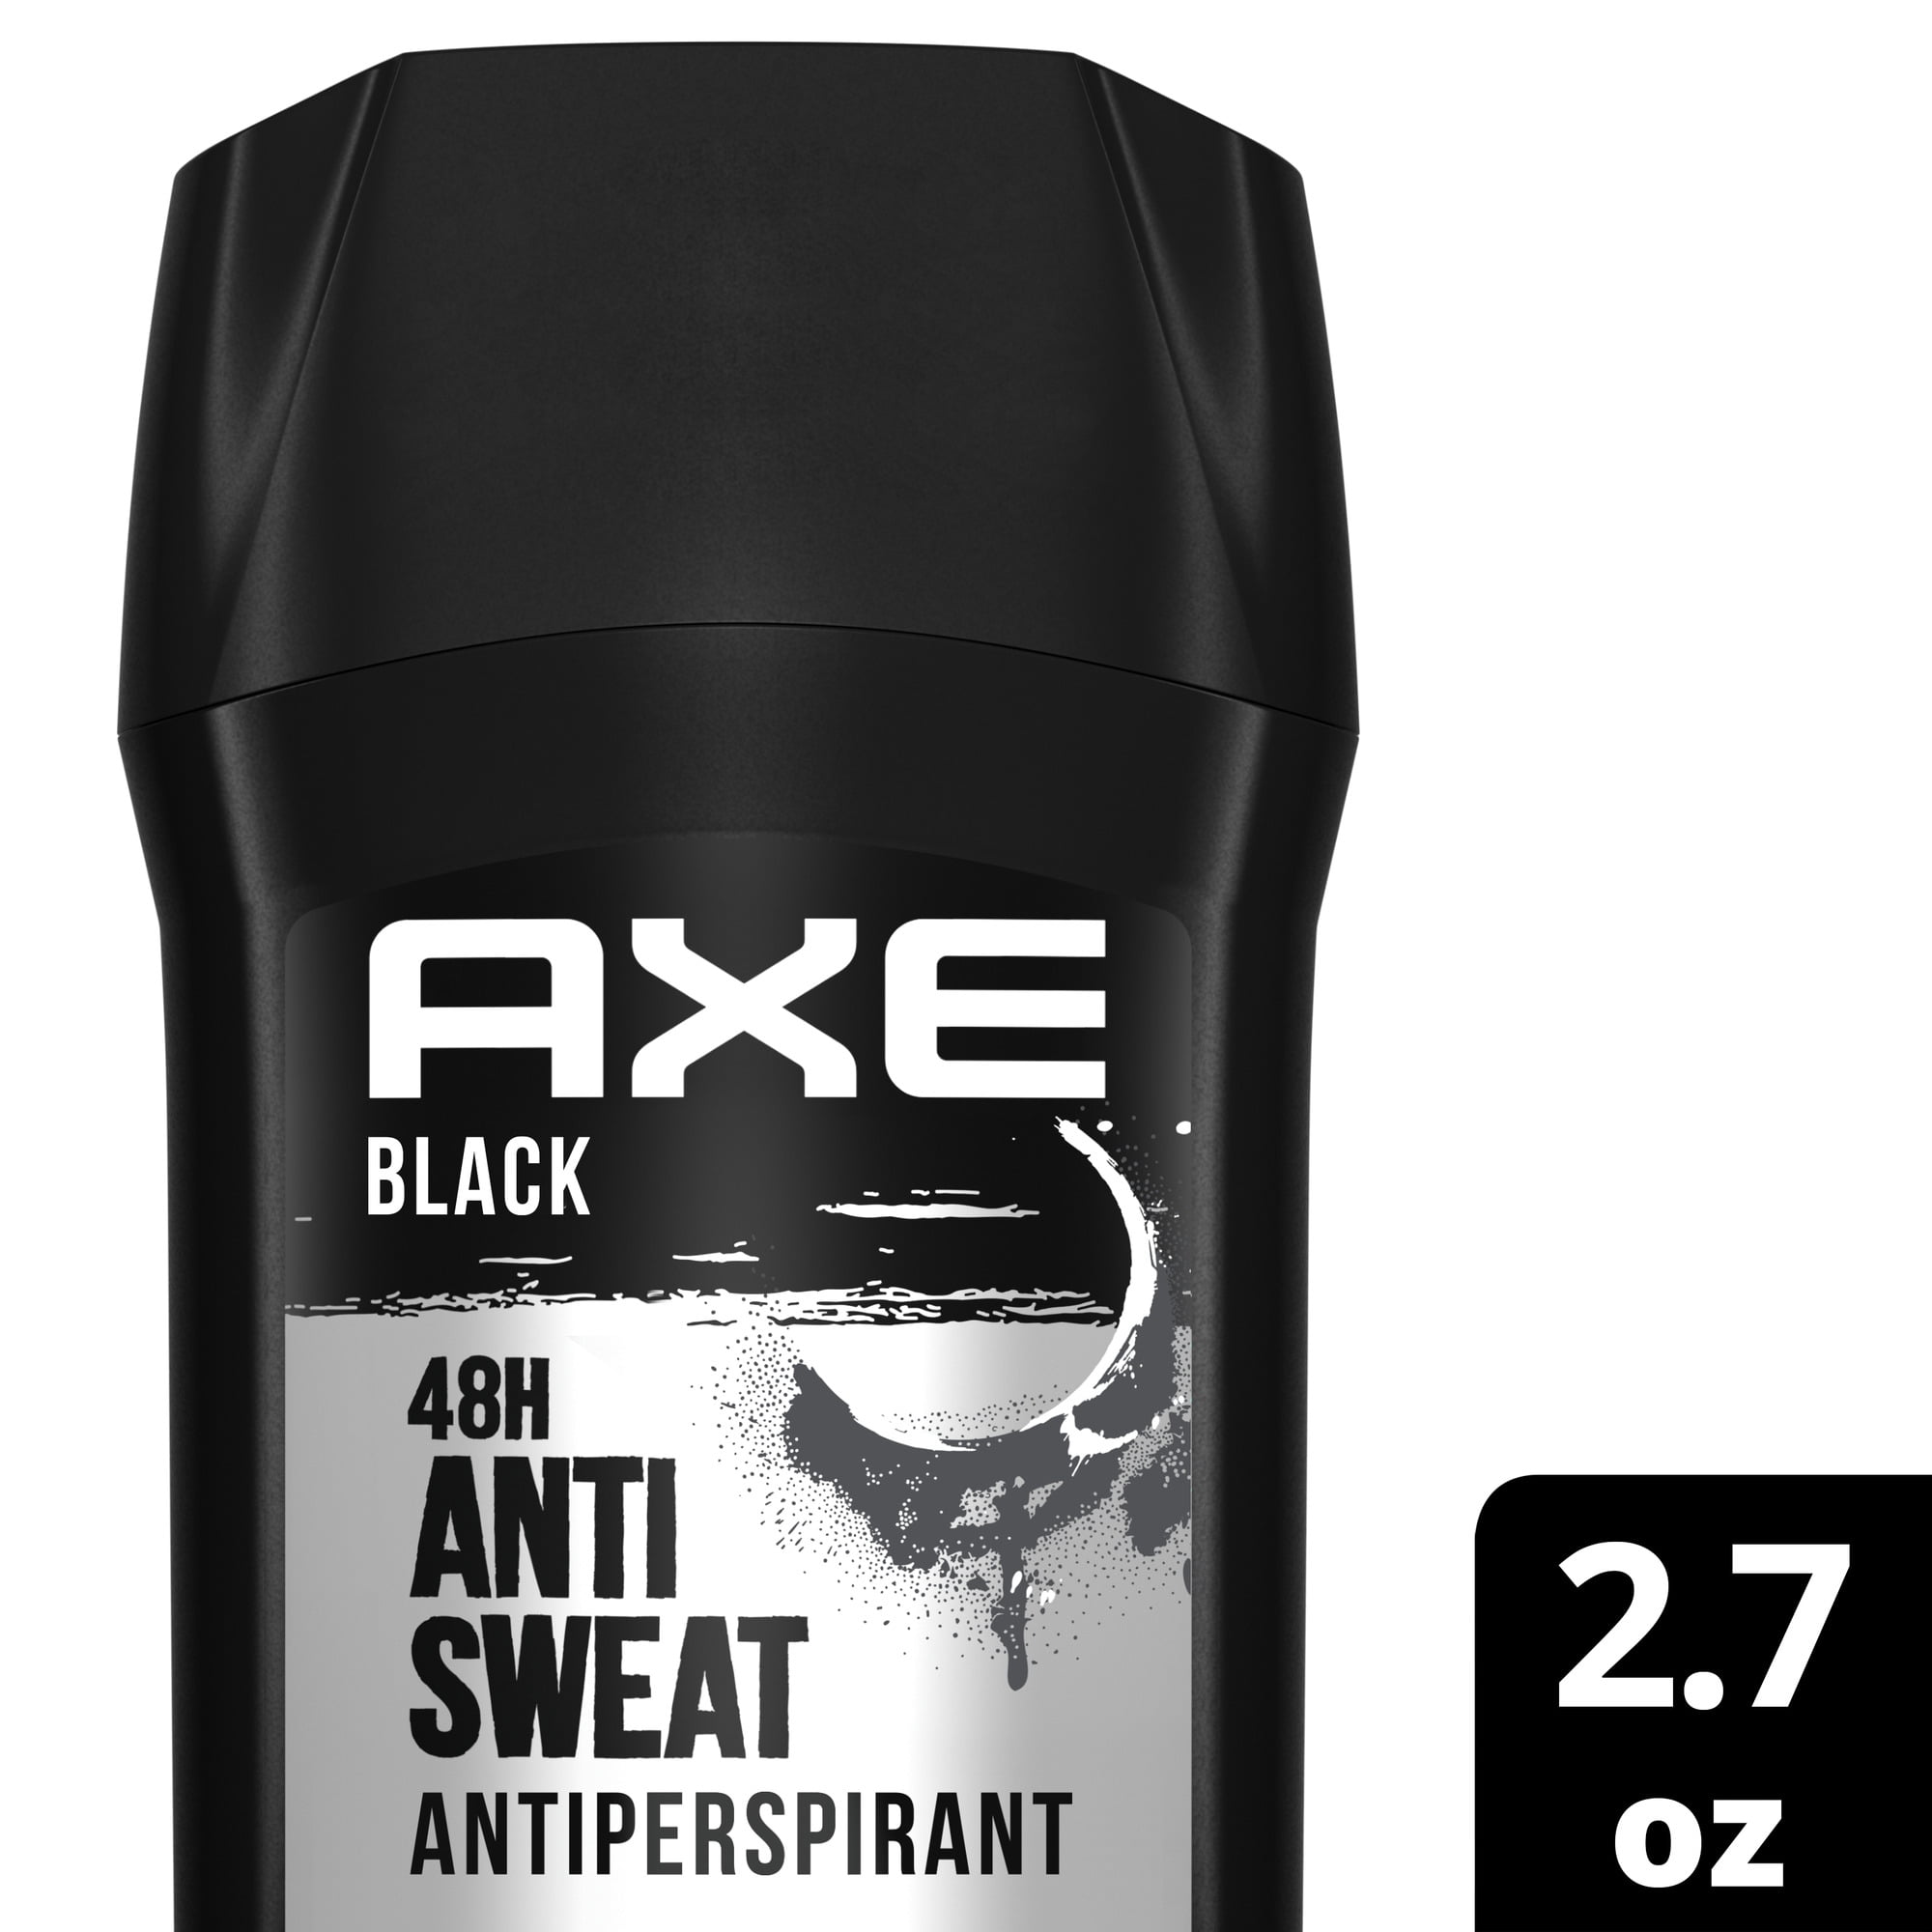 Axe Black 48H Anti Sweat Definition Scent Antiperspirant, 2.7 Oz. -